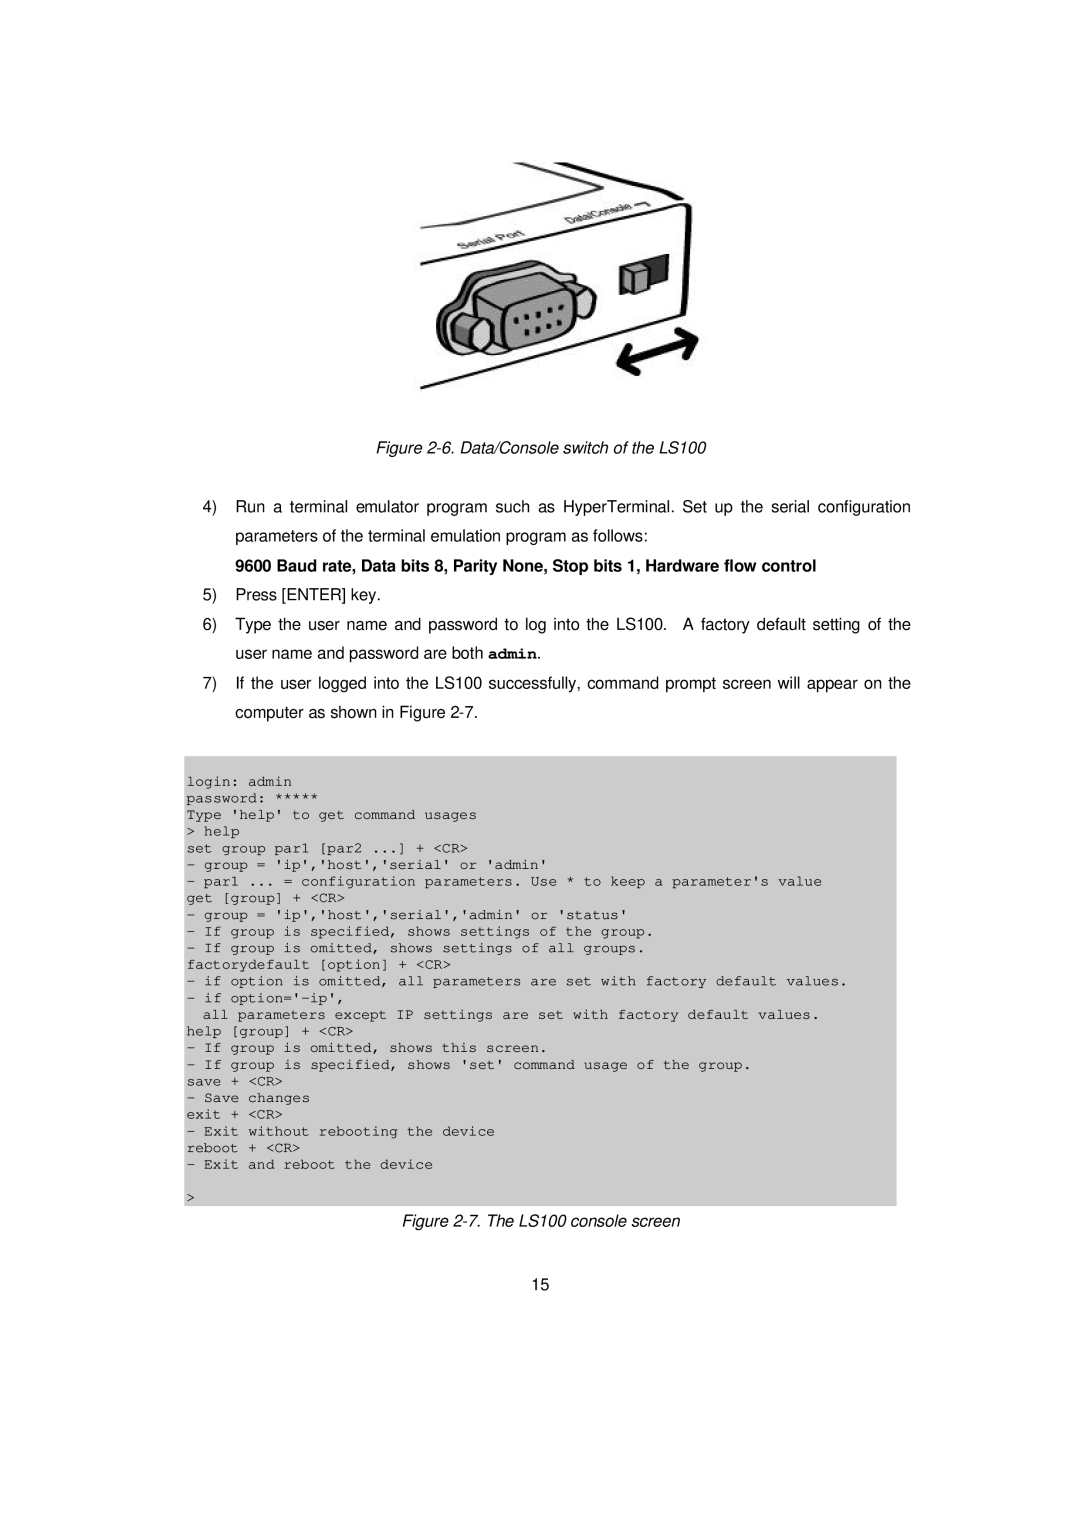 Senatek manual Data/Console switch of the LS100 